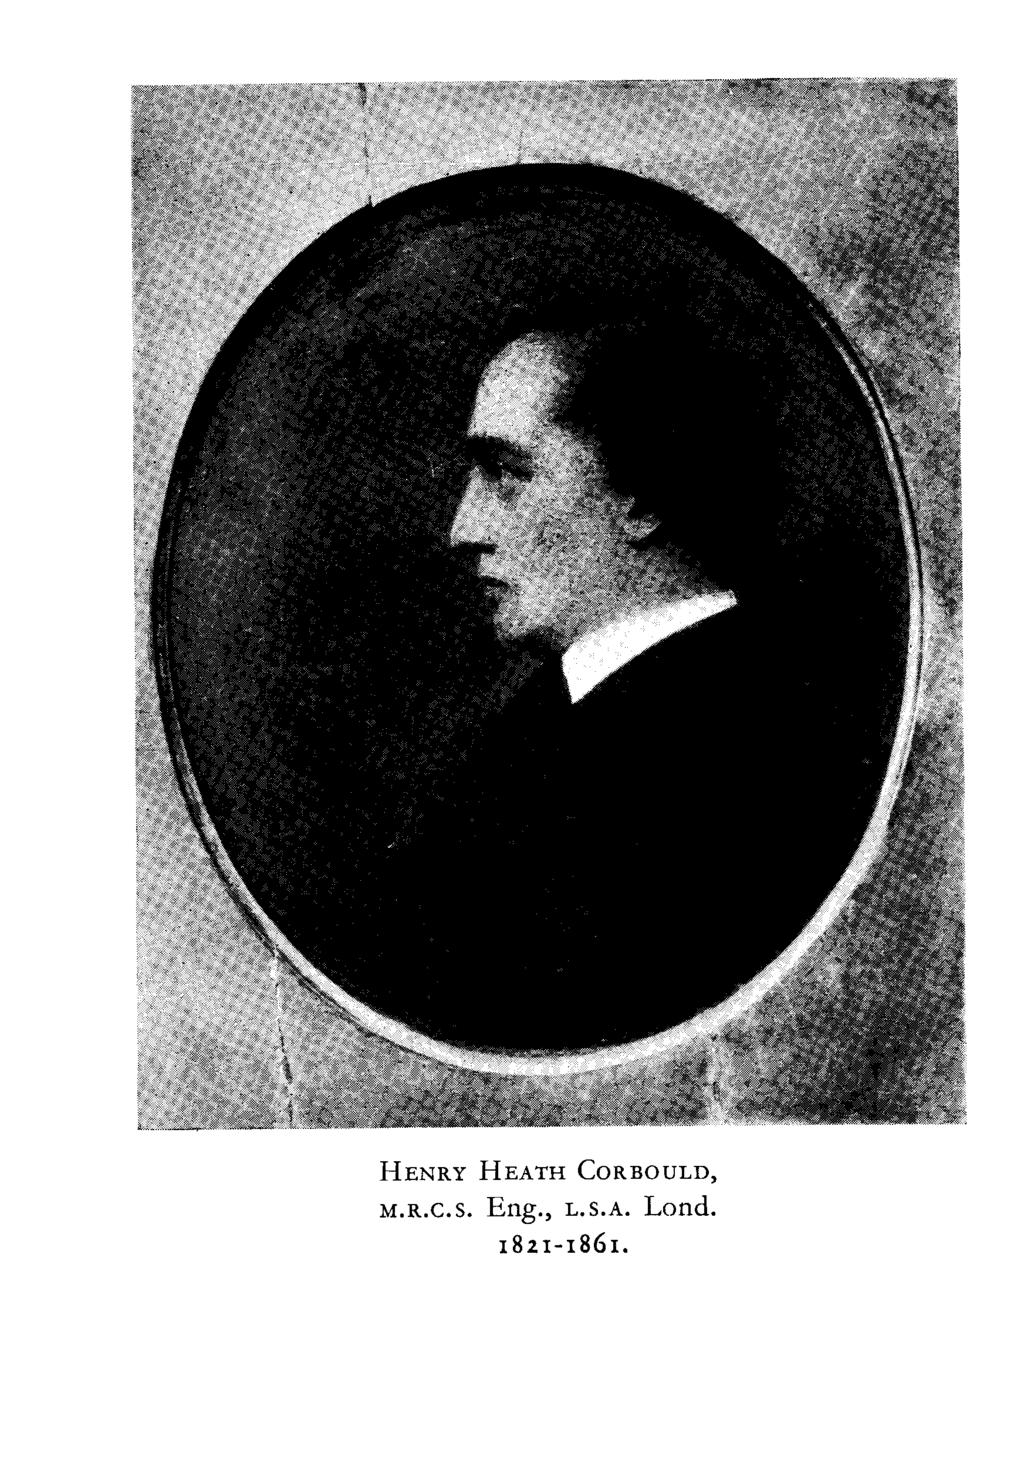 HENRY HEATH CORBOULD, M.R.C.S.